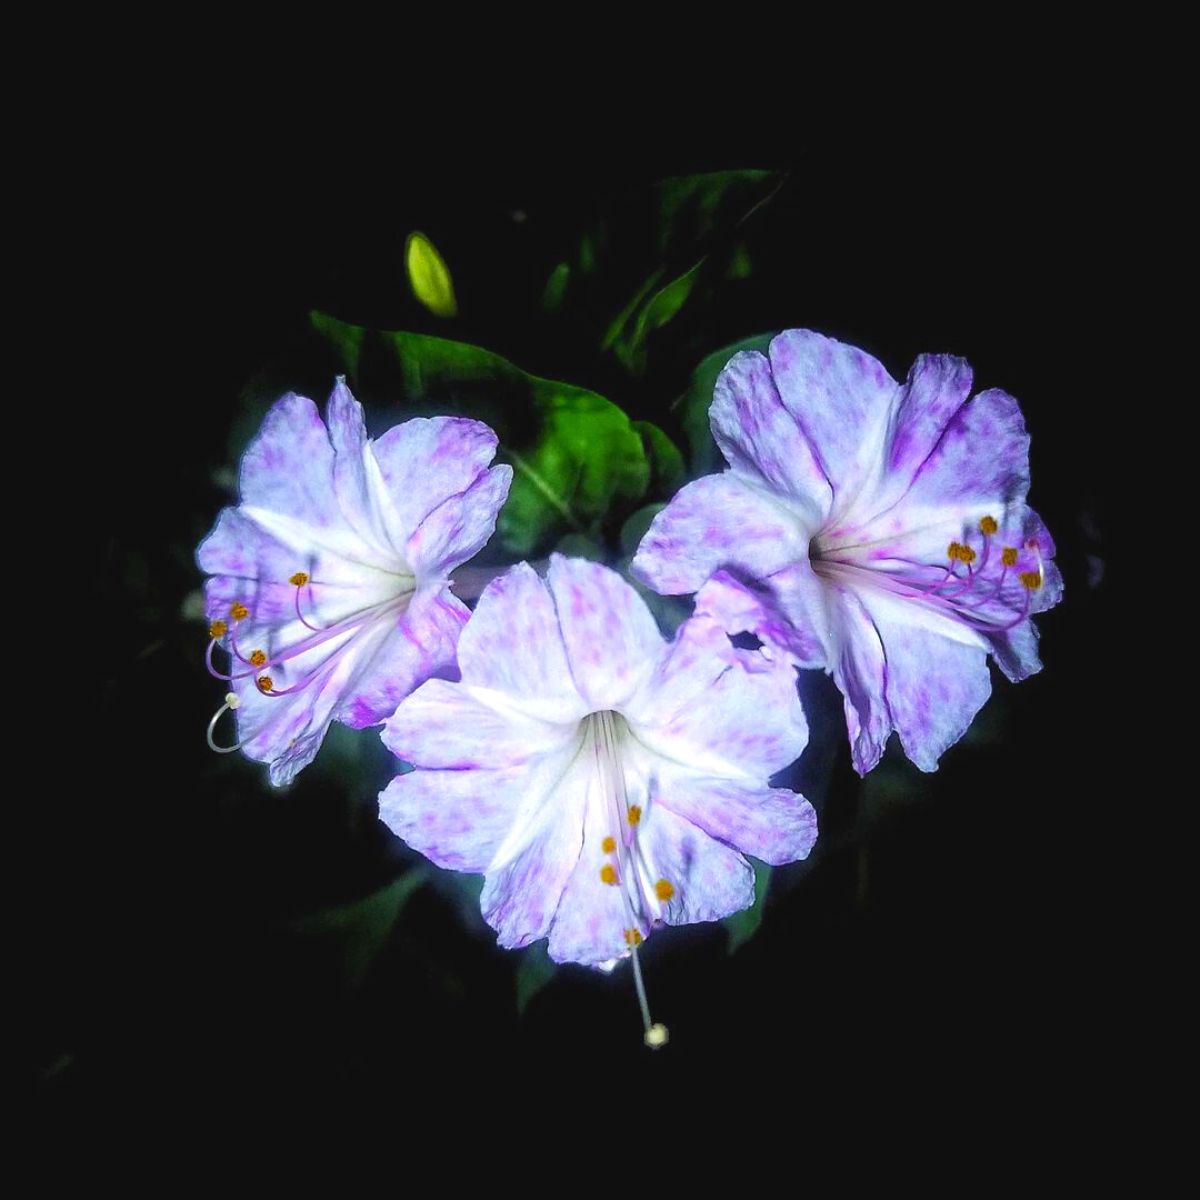 Four O Clock Alba Mirabilis Jalapa flower at night